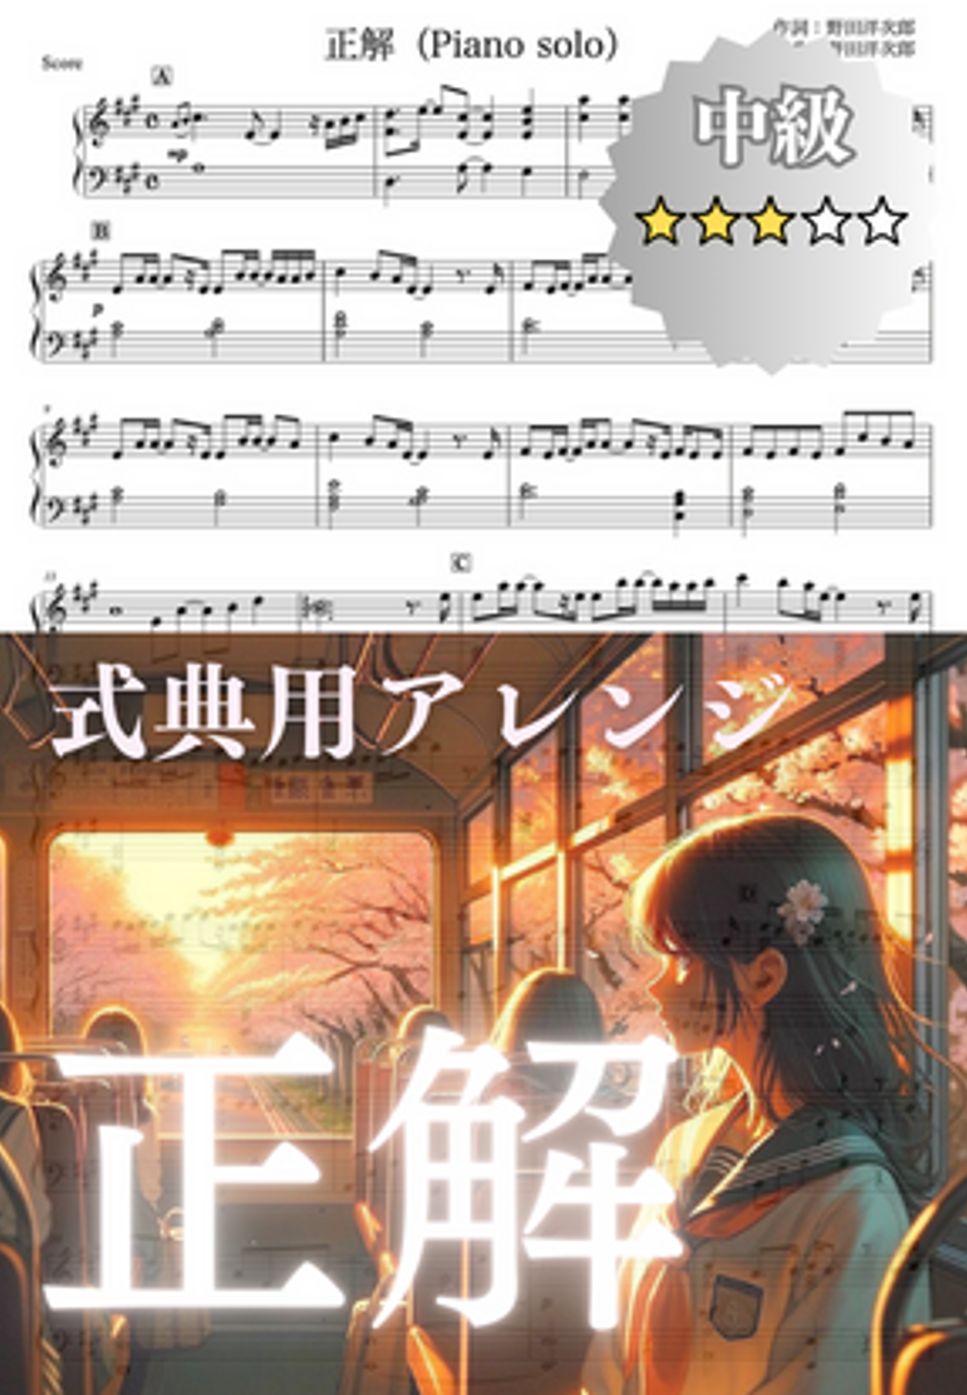 RADWIMPS - 【卒業式BGM用】「正解」ピアノアレンジ (卒業式/BGM/ピアノ) by cogito